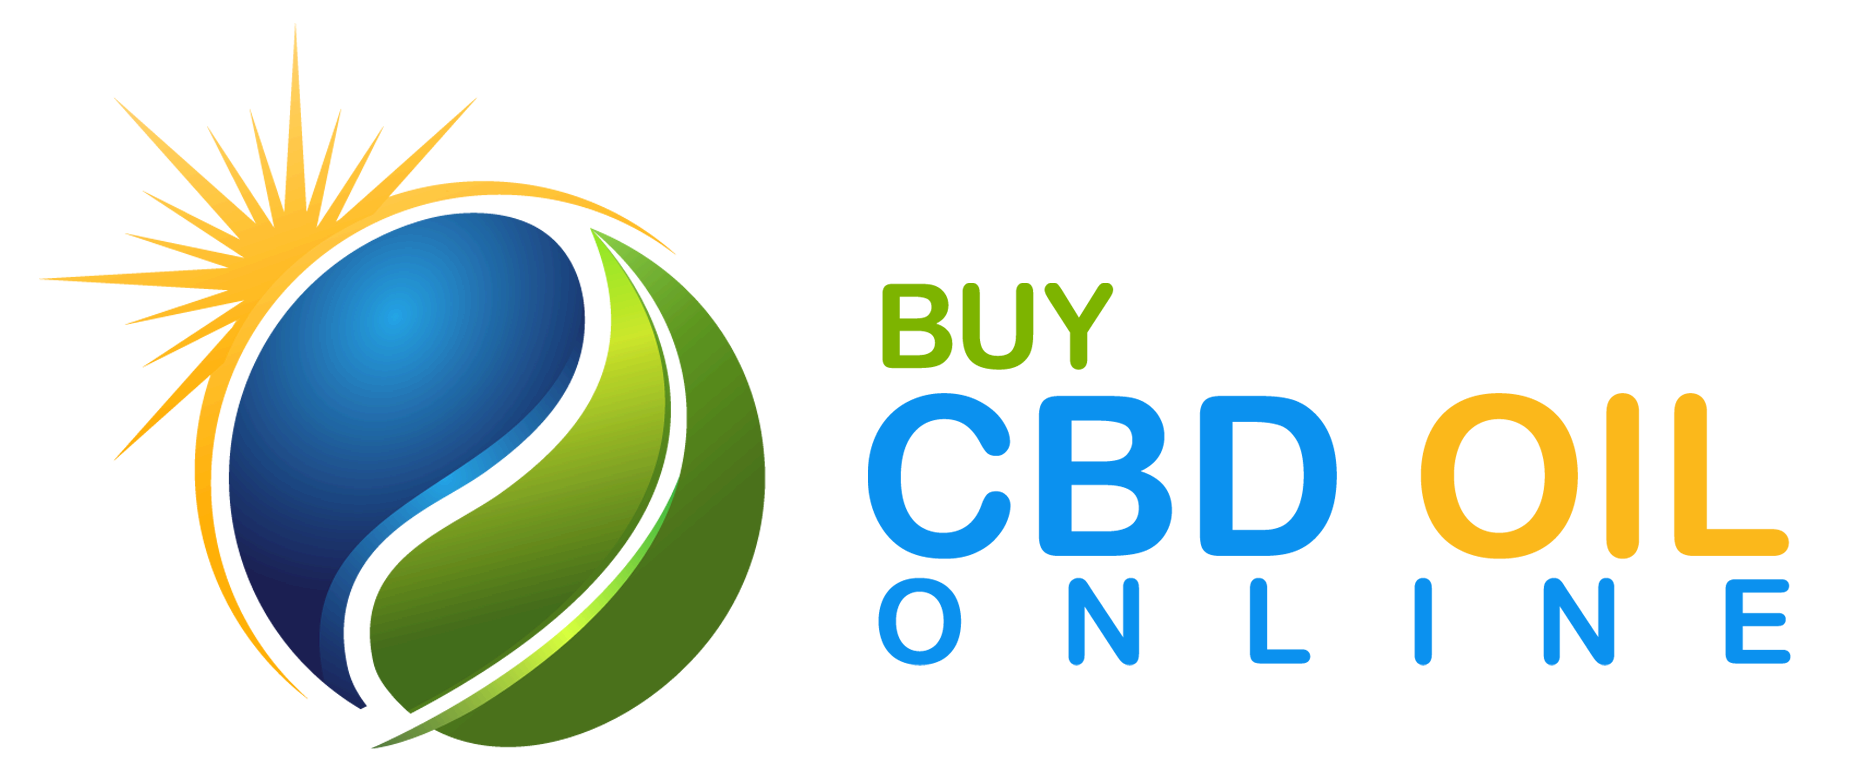 Buy CBD Oil Online Best Life Hemp Organic Jelly Beans 2